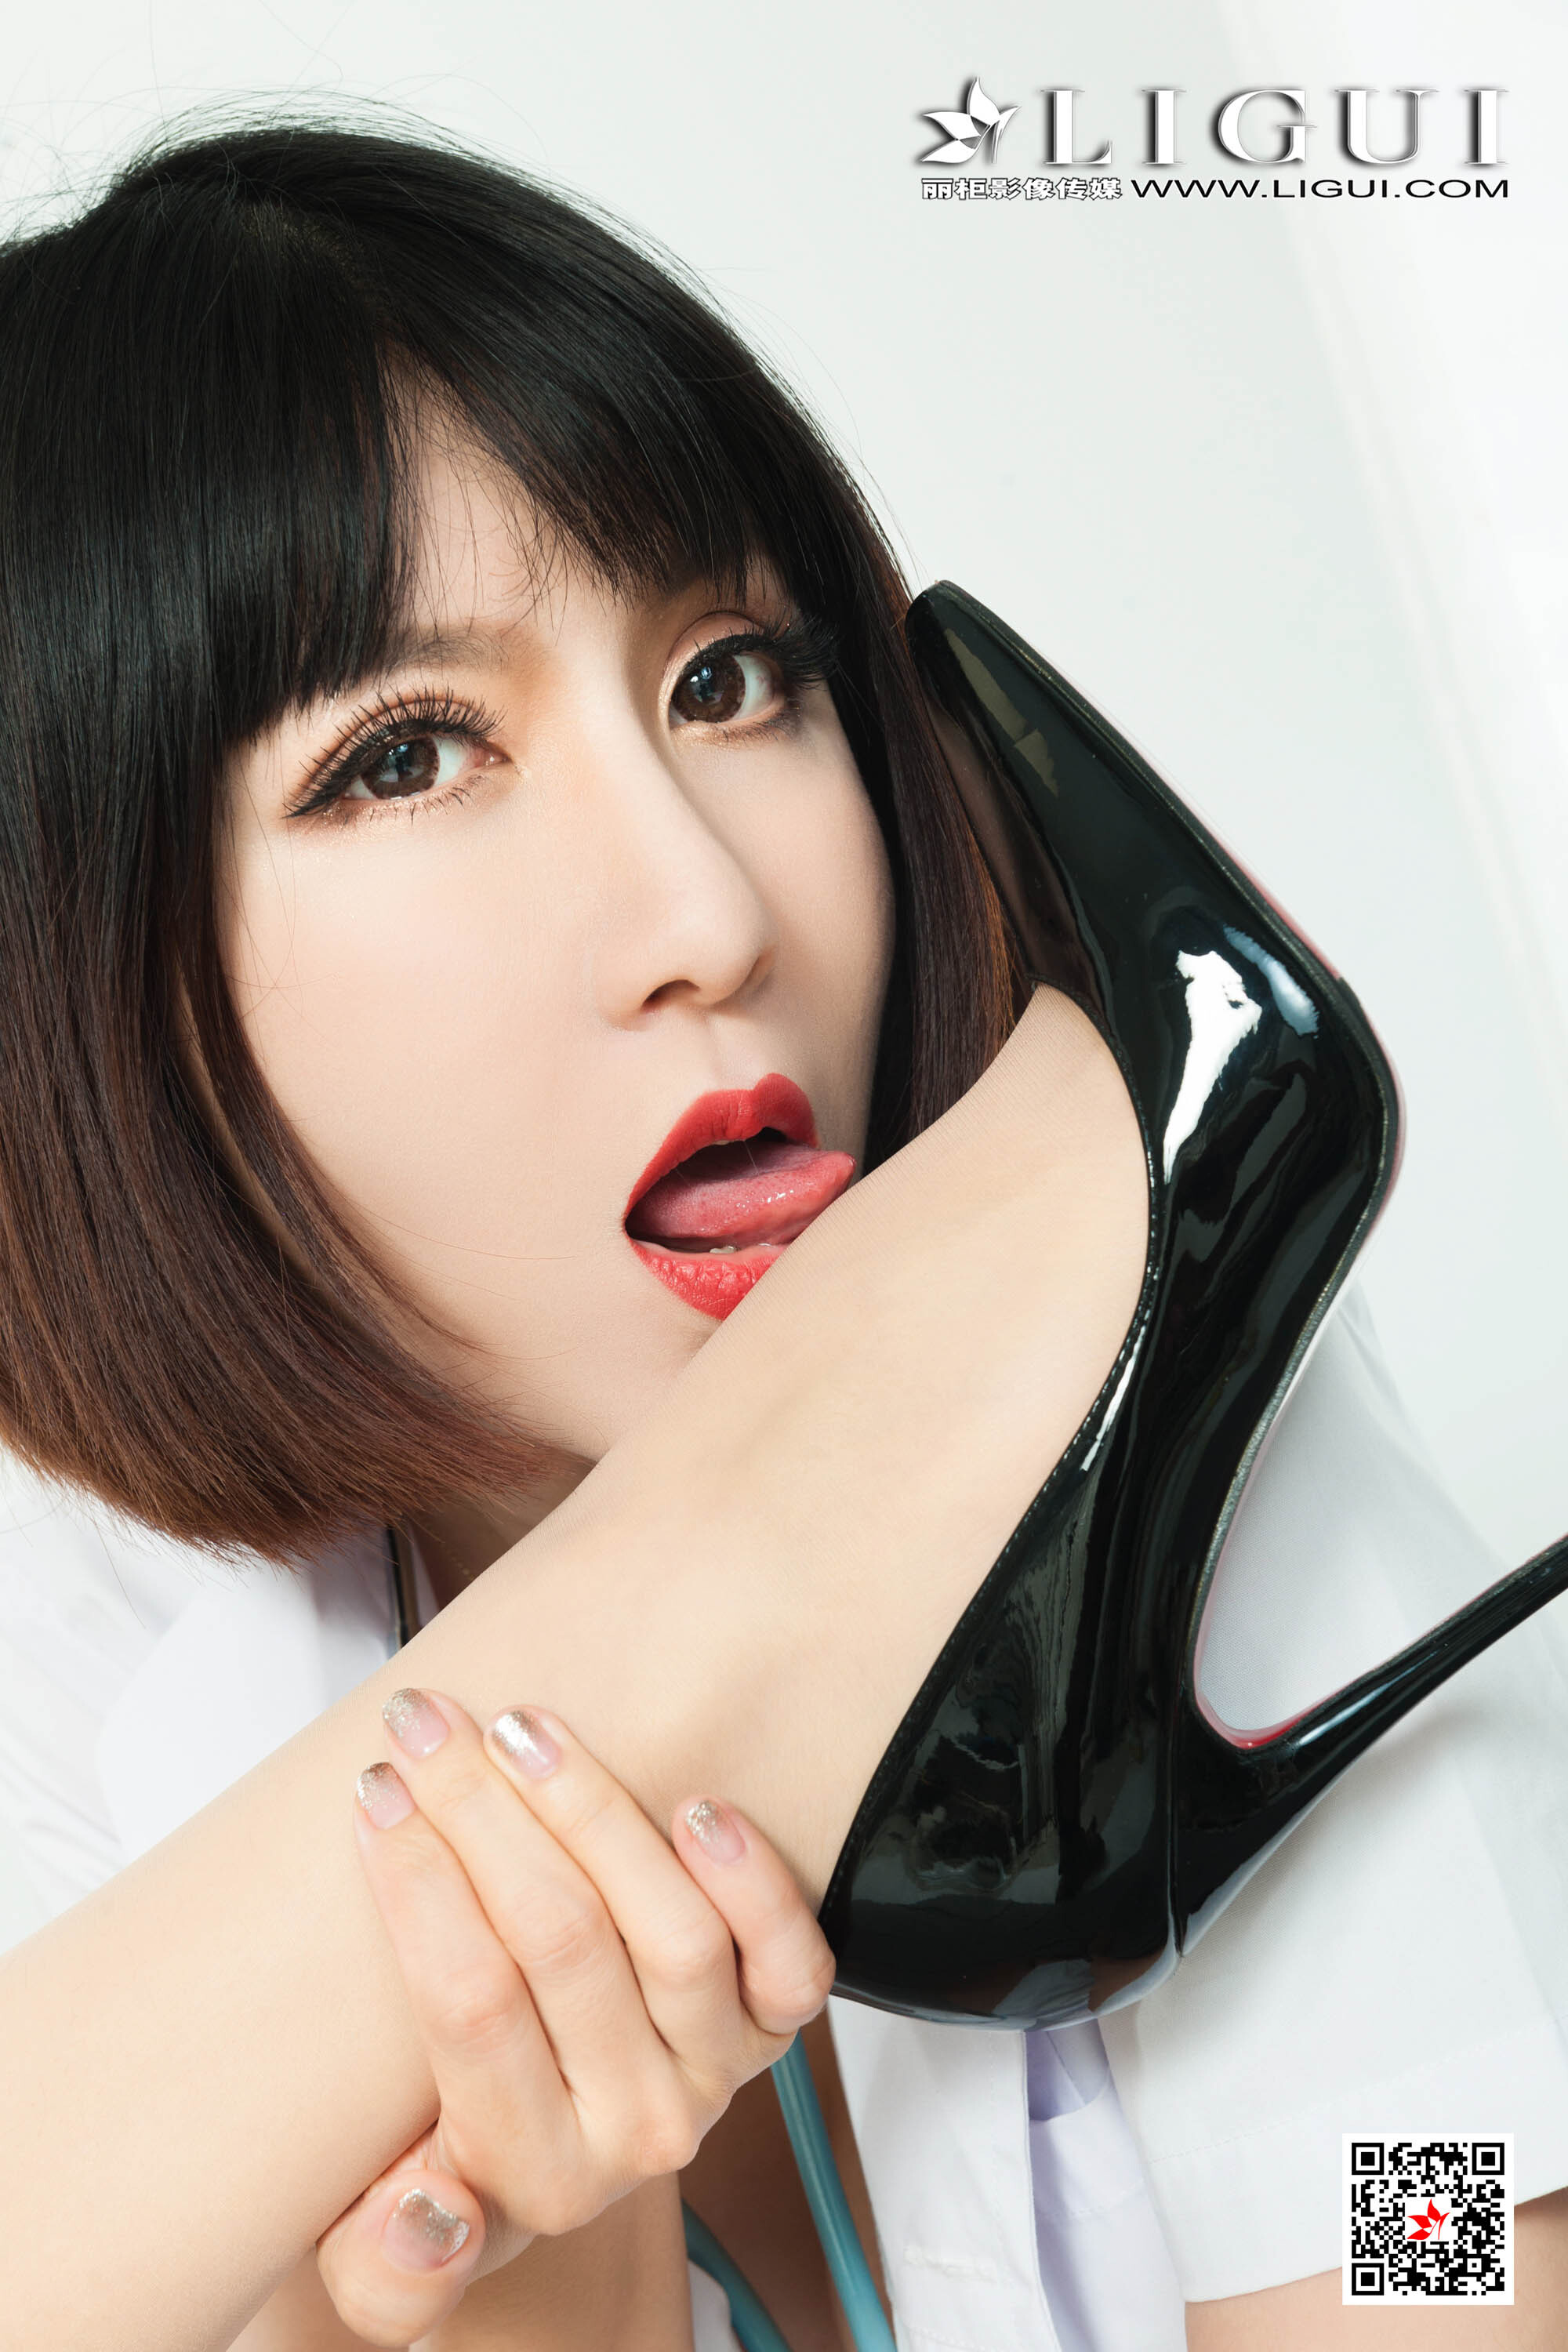 Ligui cabinet 2020.11.06 network beauty model Wenrui  Pandora